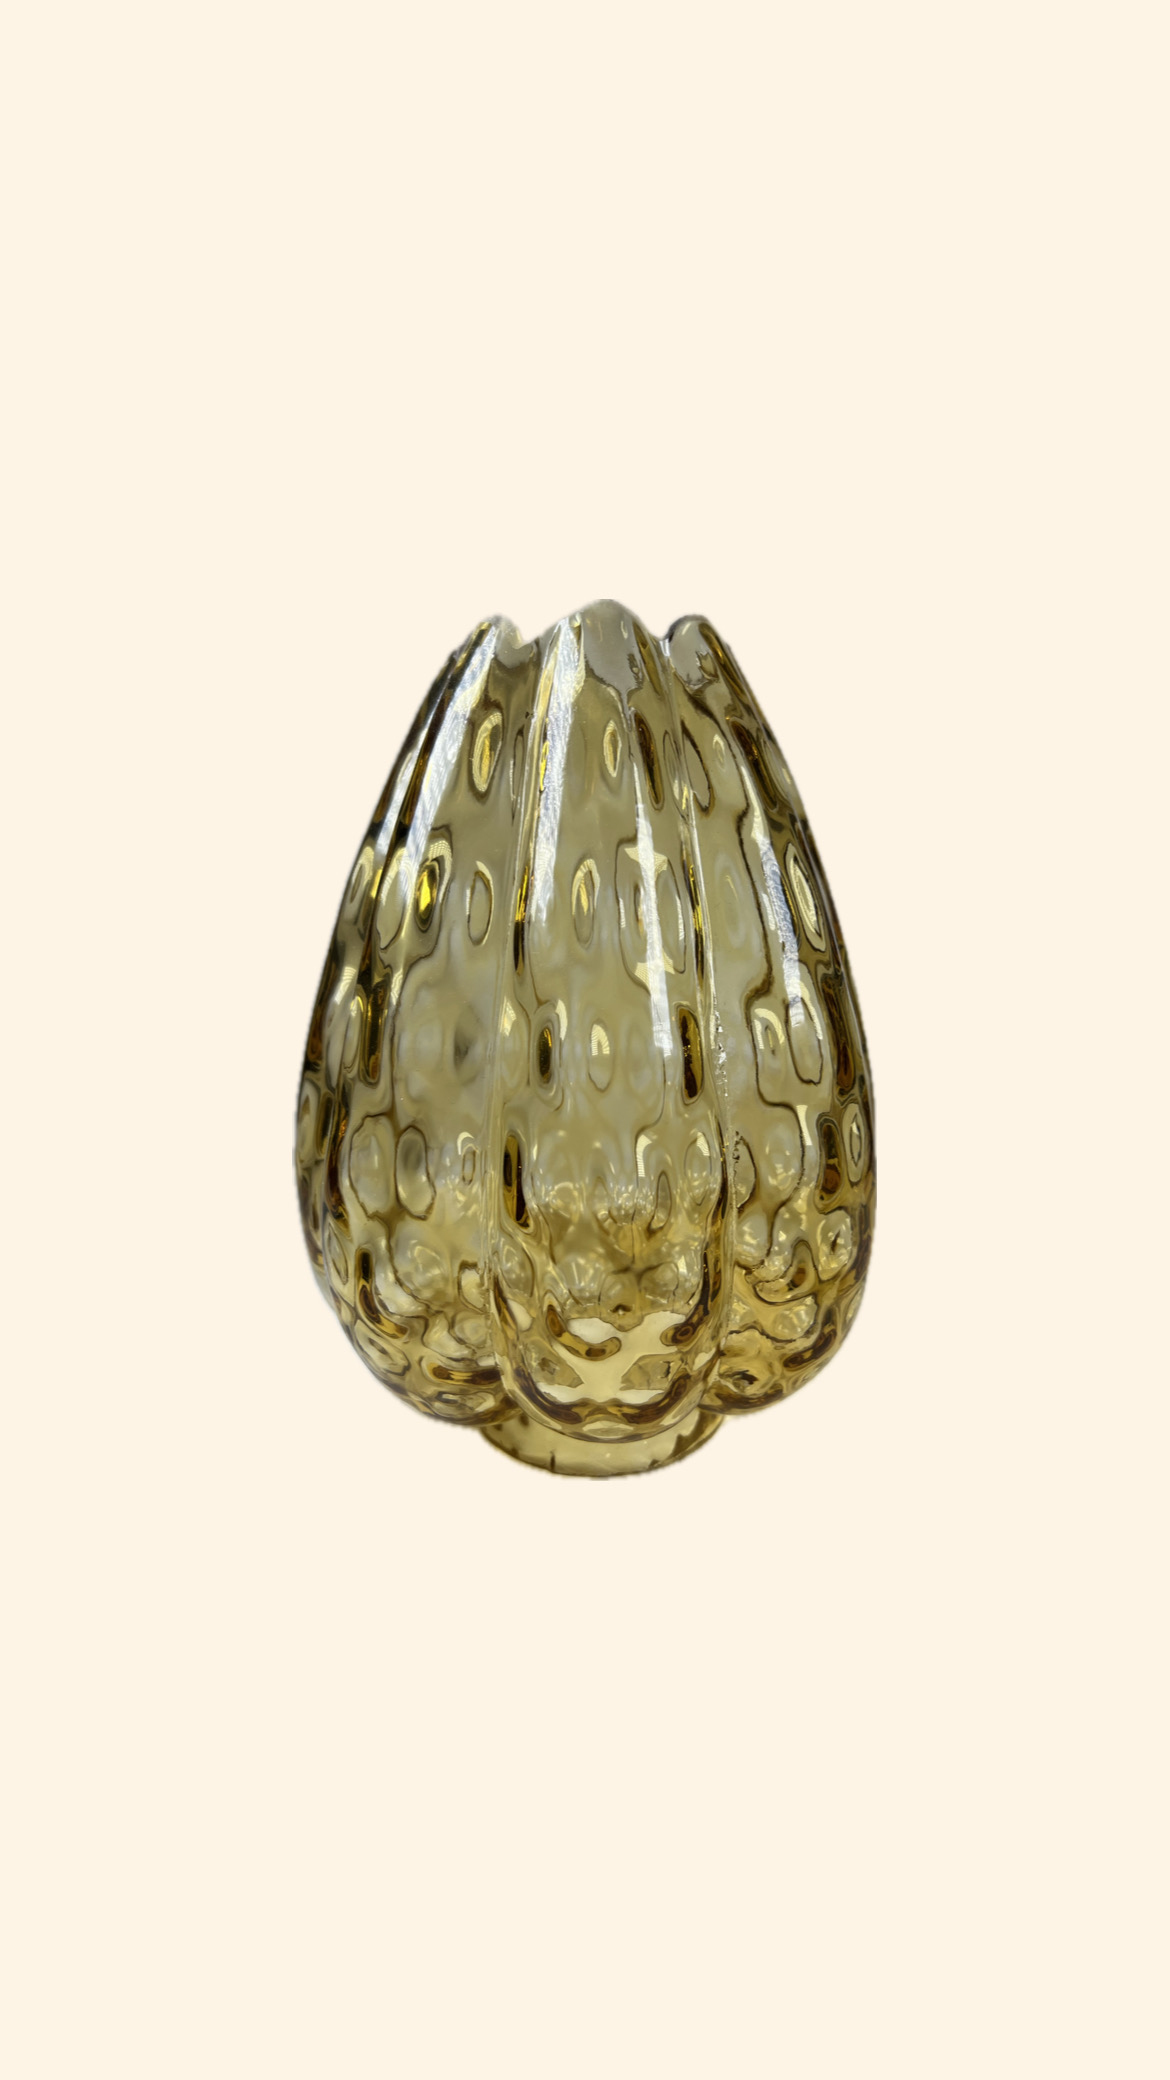 Amber tulpankupa från Rosdala glasbruk i amberfärgat glas